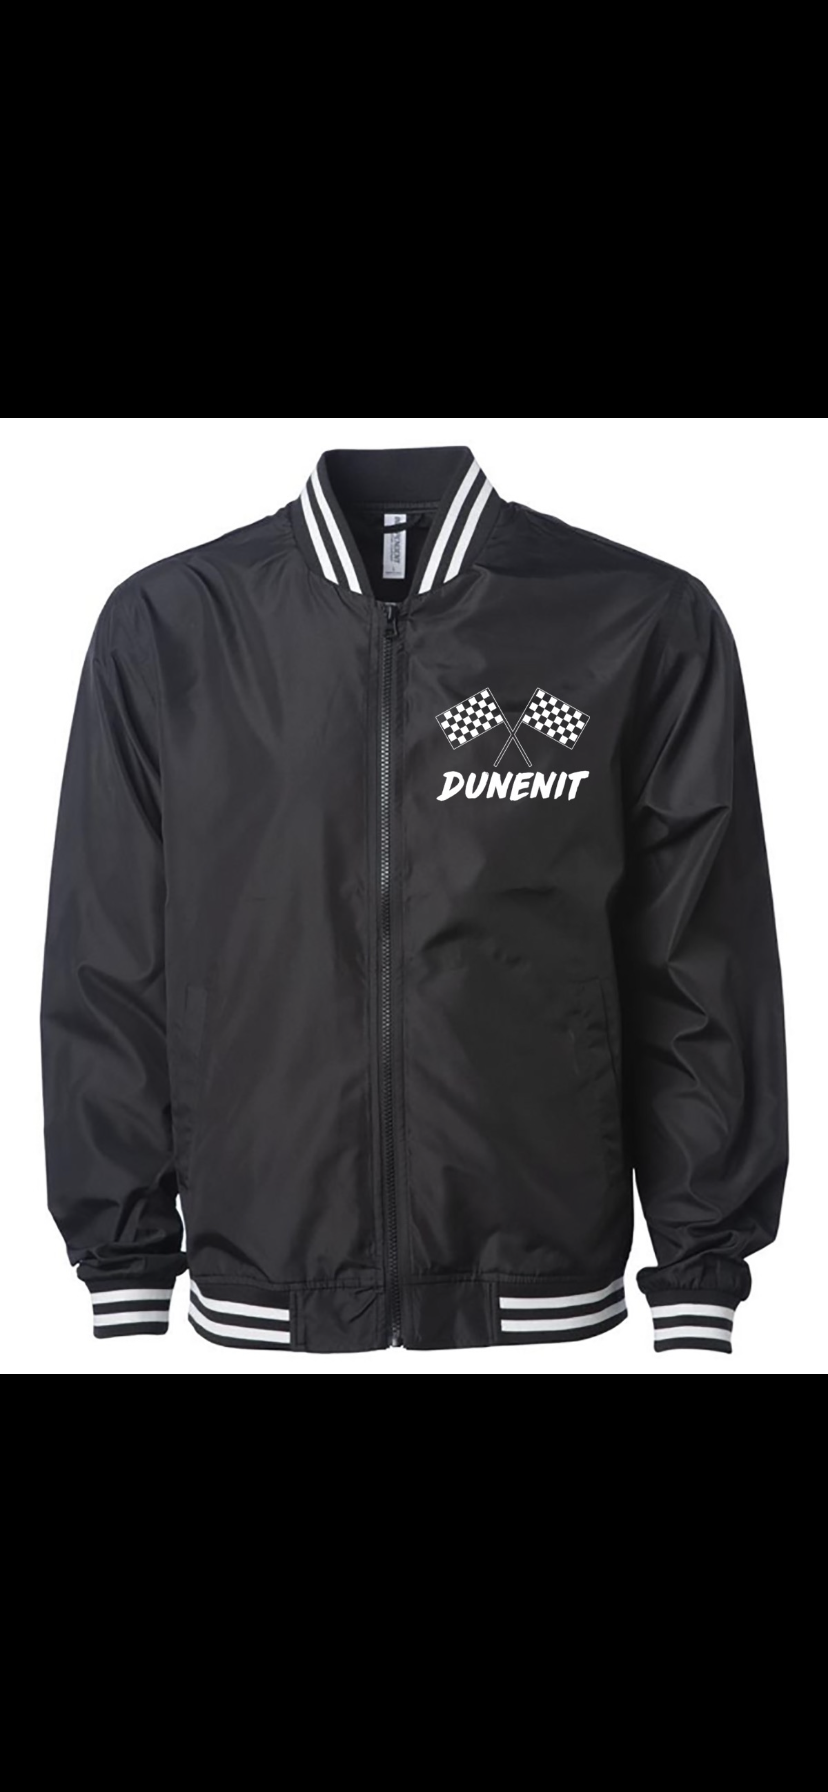 DUNENIT bomber racing jacket